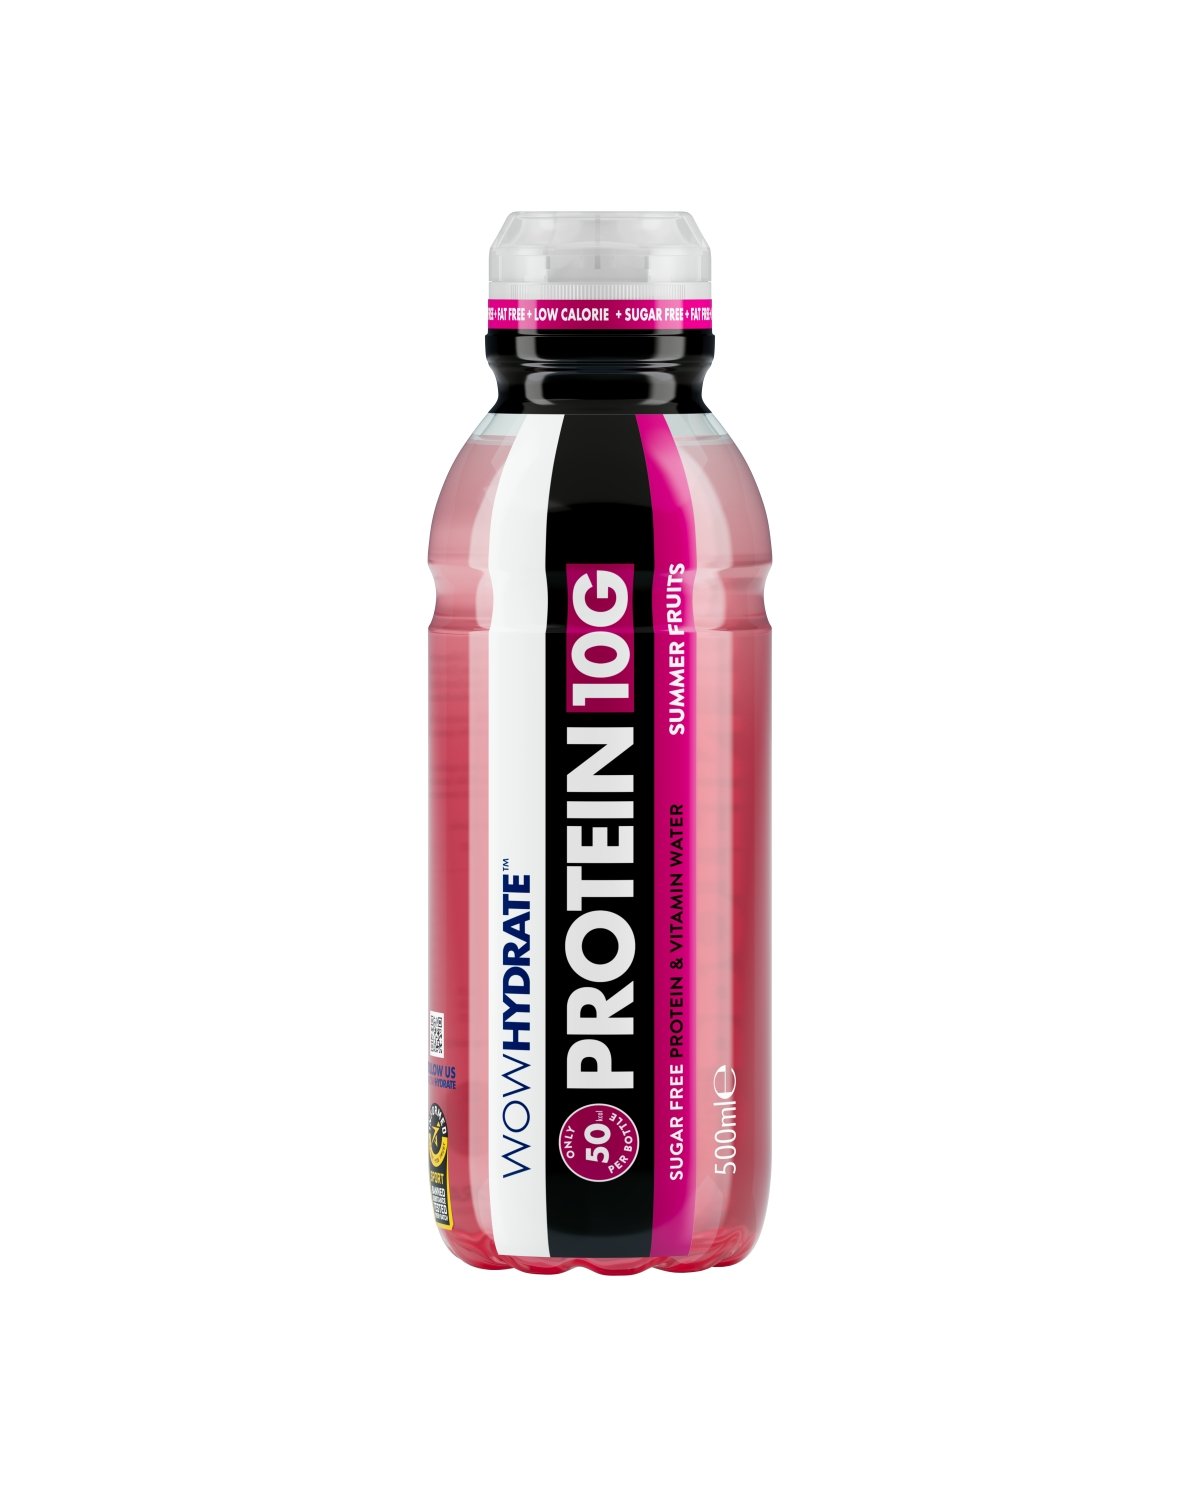 Wow Hydrate Protein Water Drink 2 príchute – 500 ml (10 g proteínu) – theskinnyfoodco